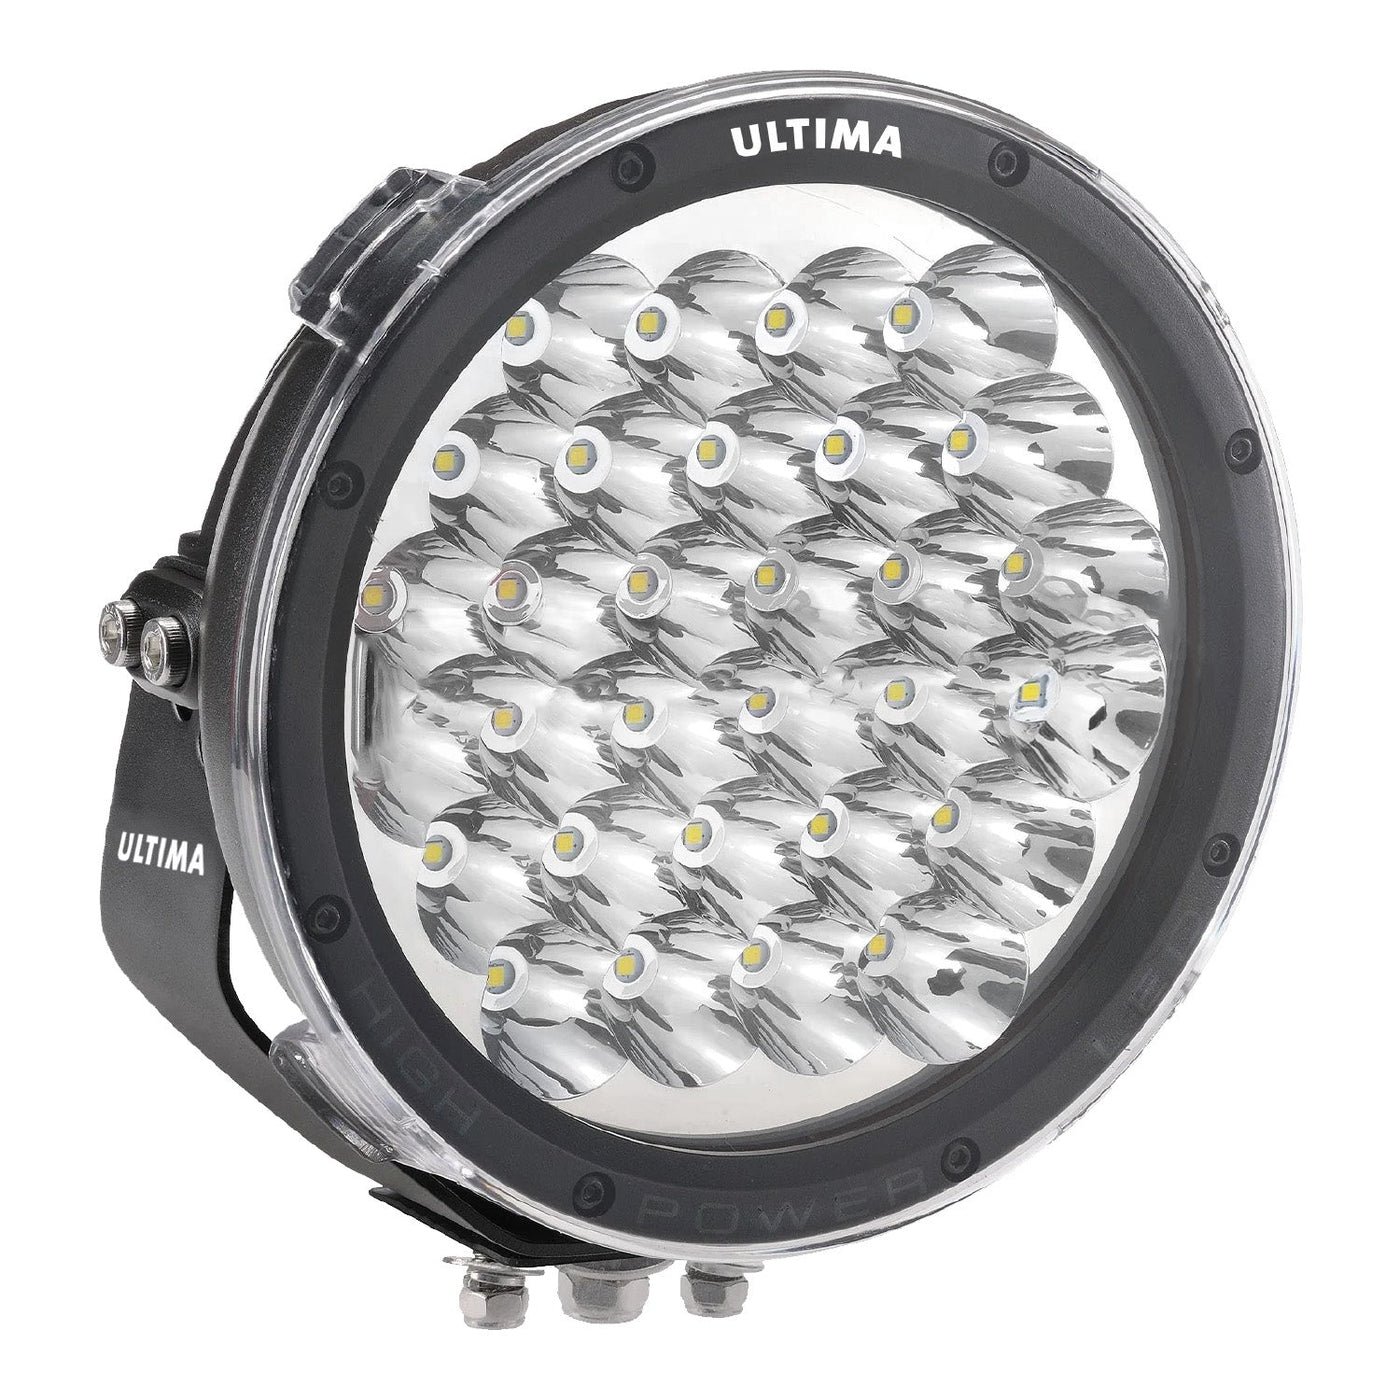 9" Ultima LED Driving Light